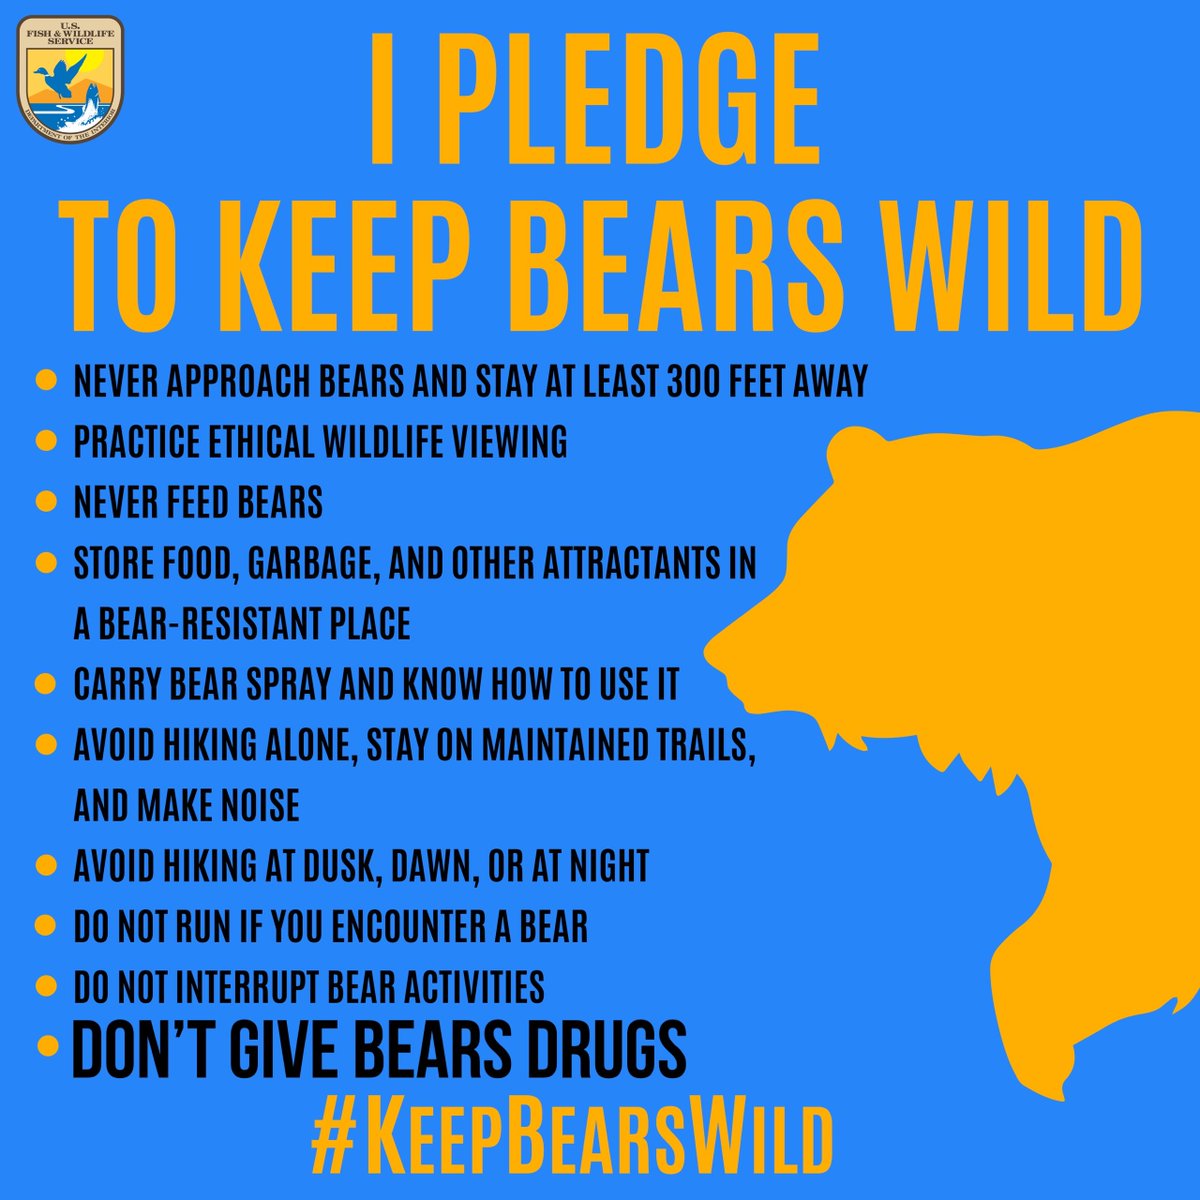 @waDNR @cocainebear Please everyone on this thread take our #KeepBearsWild pledge.